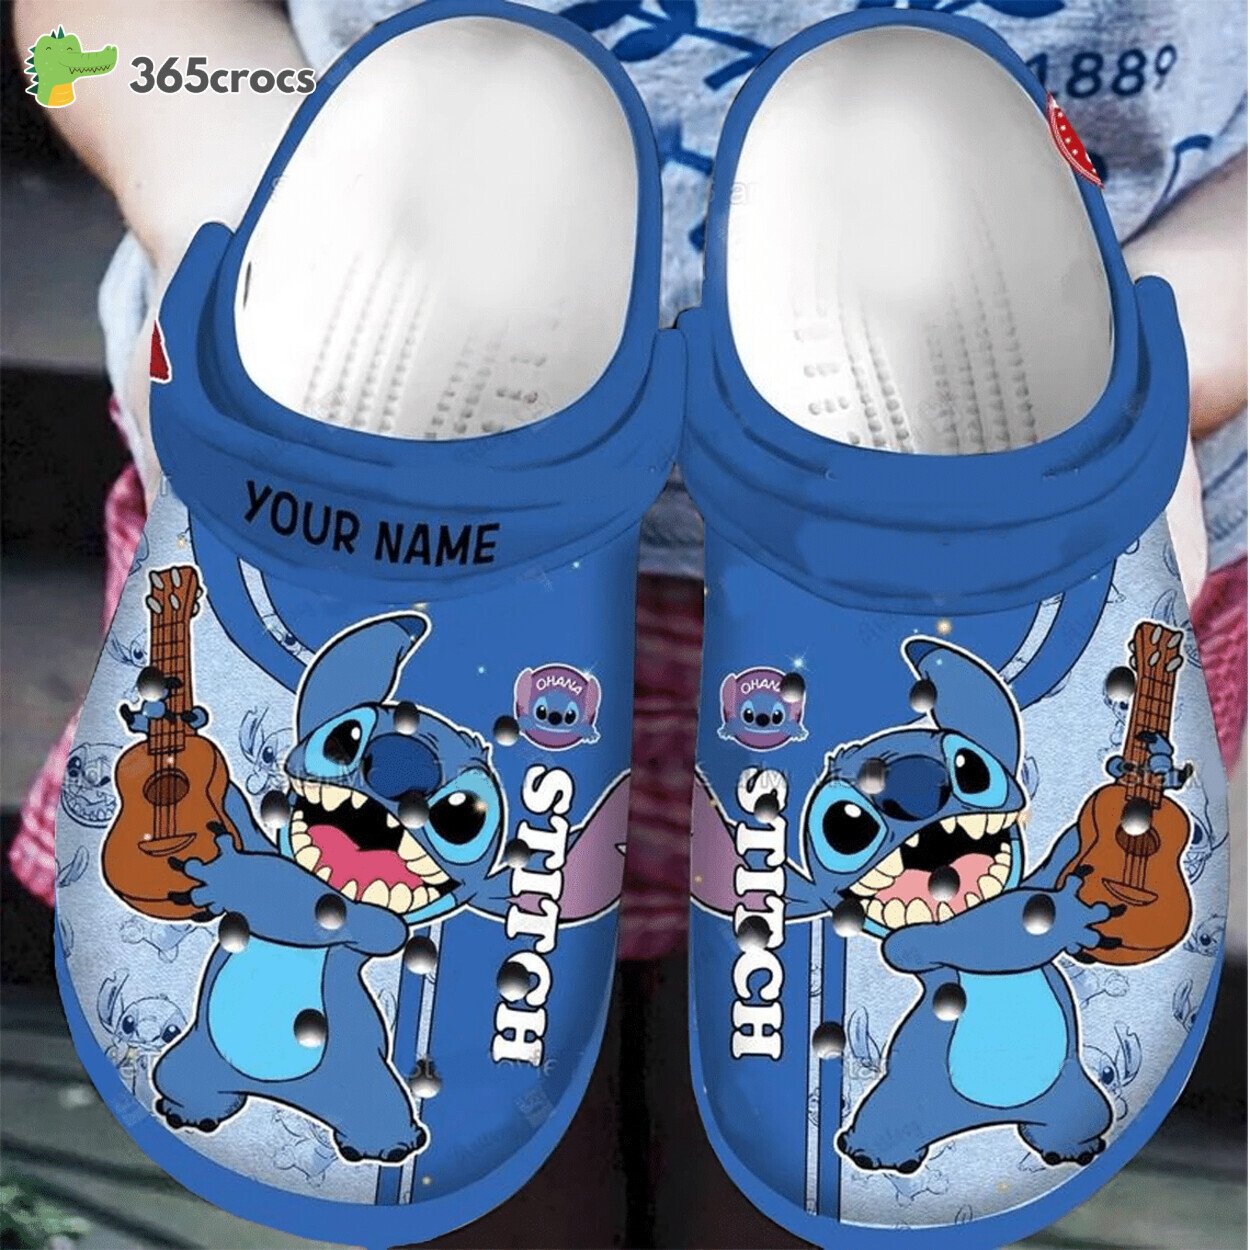 Lilo Stitch Disney Animation Design One Comfortable Crocss Clog Footwear